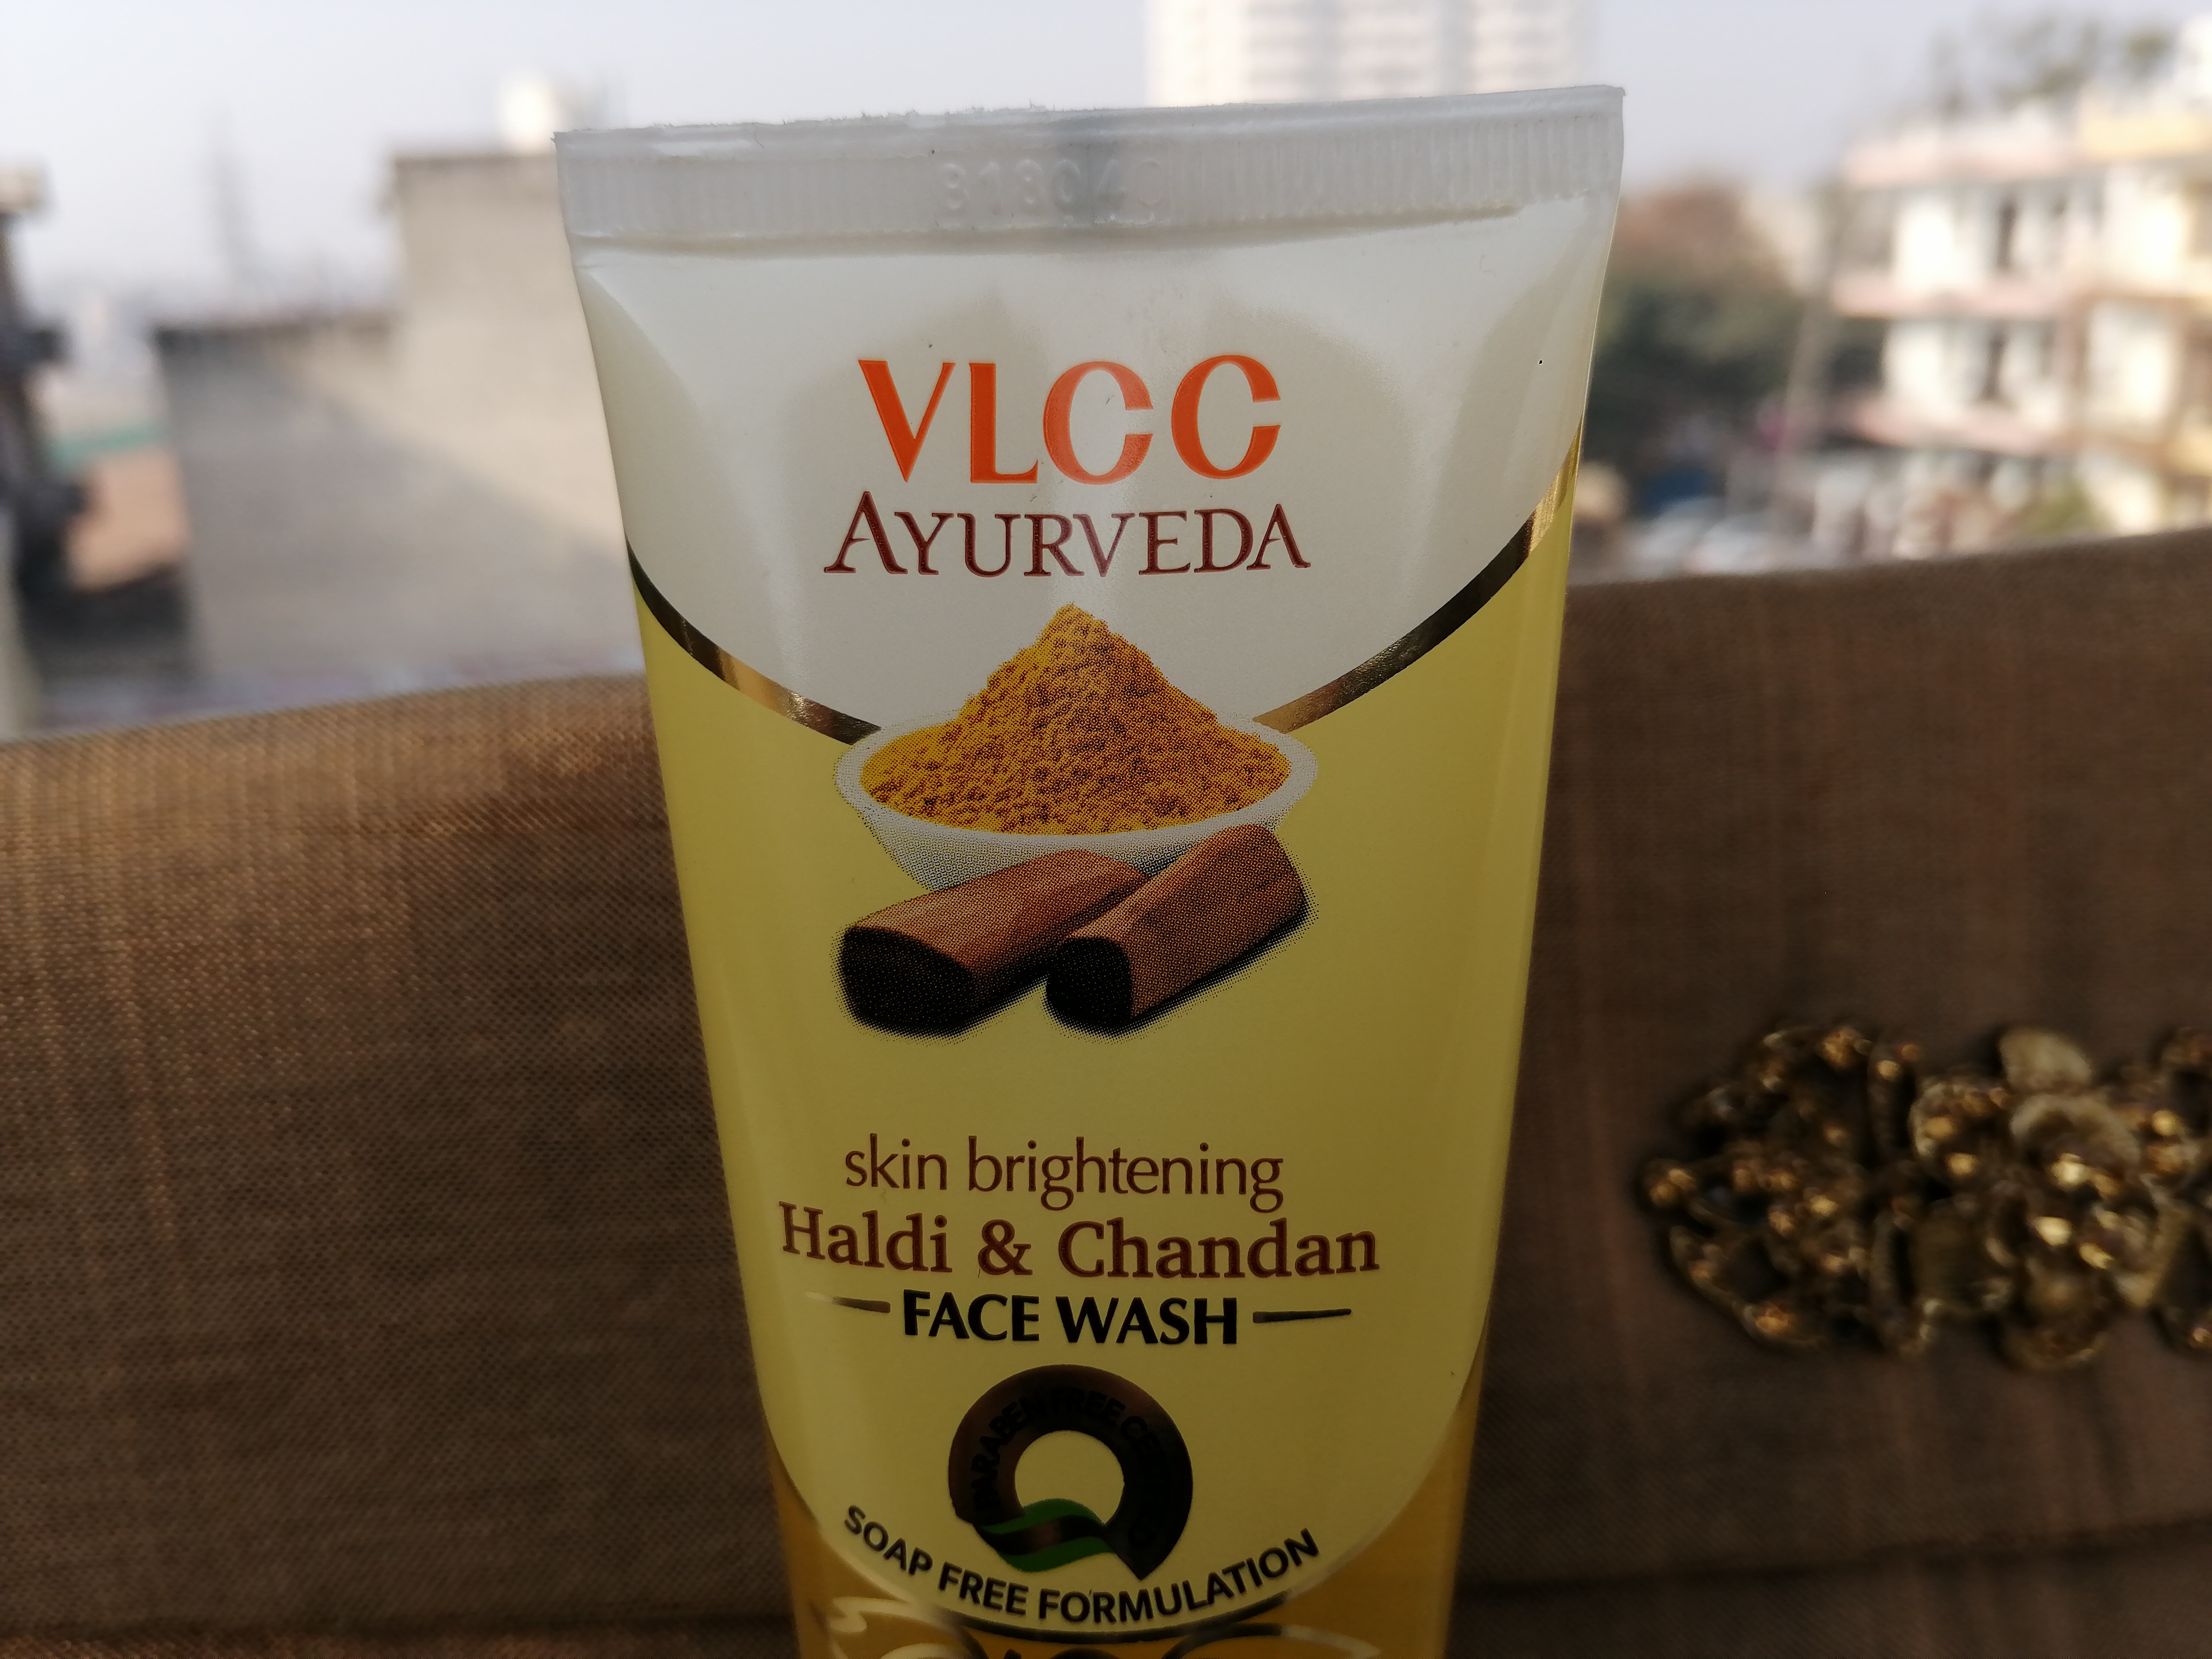 VLCC Ayurveda Haldi & Chandan Face Wash| Review